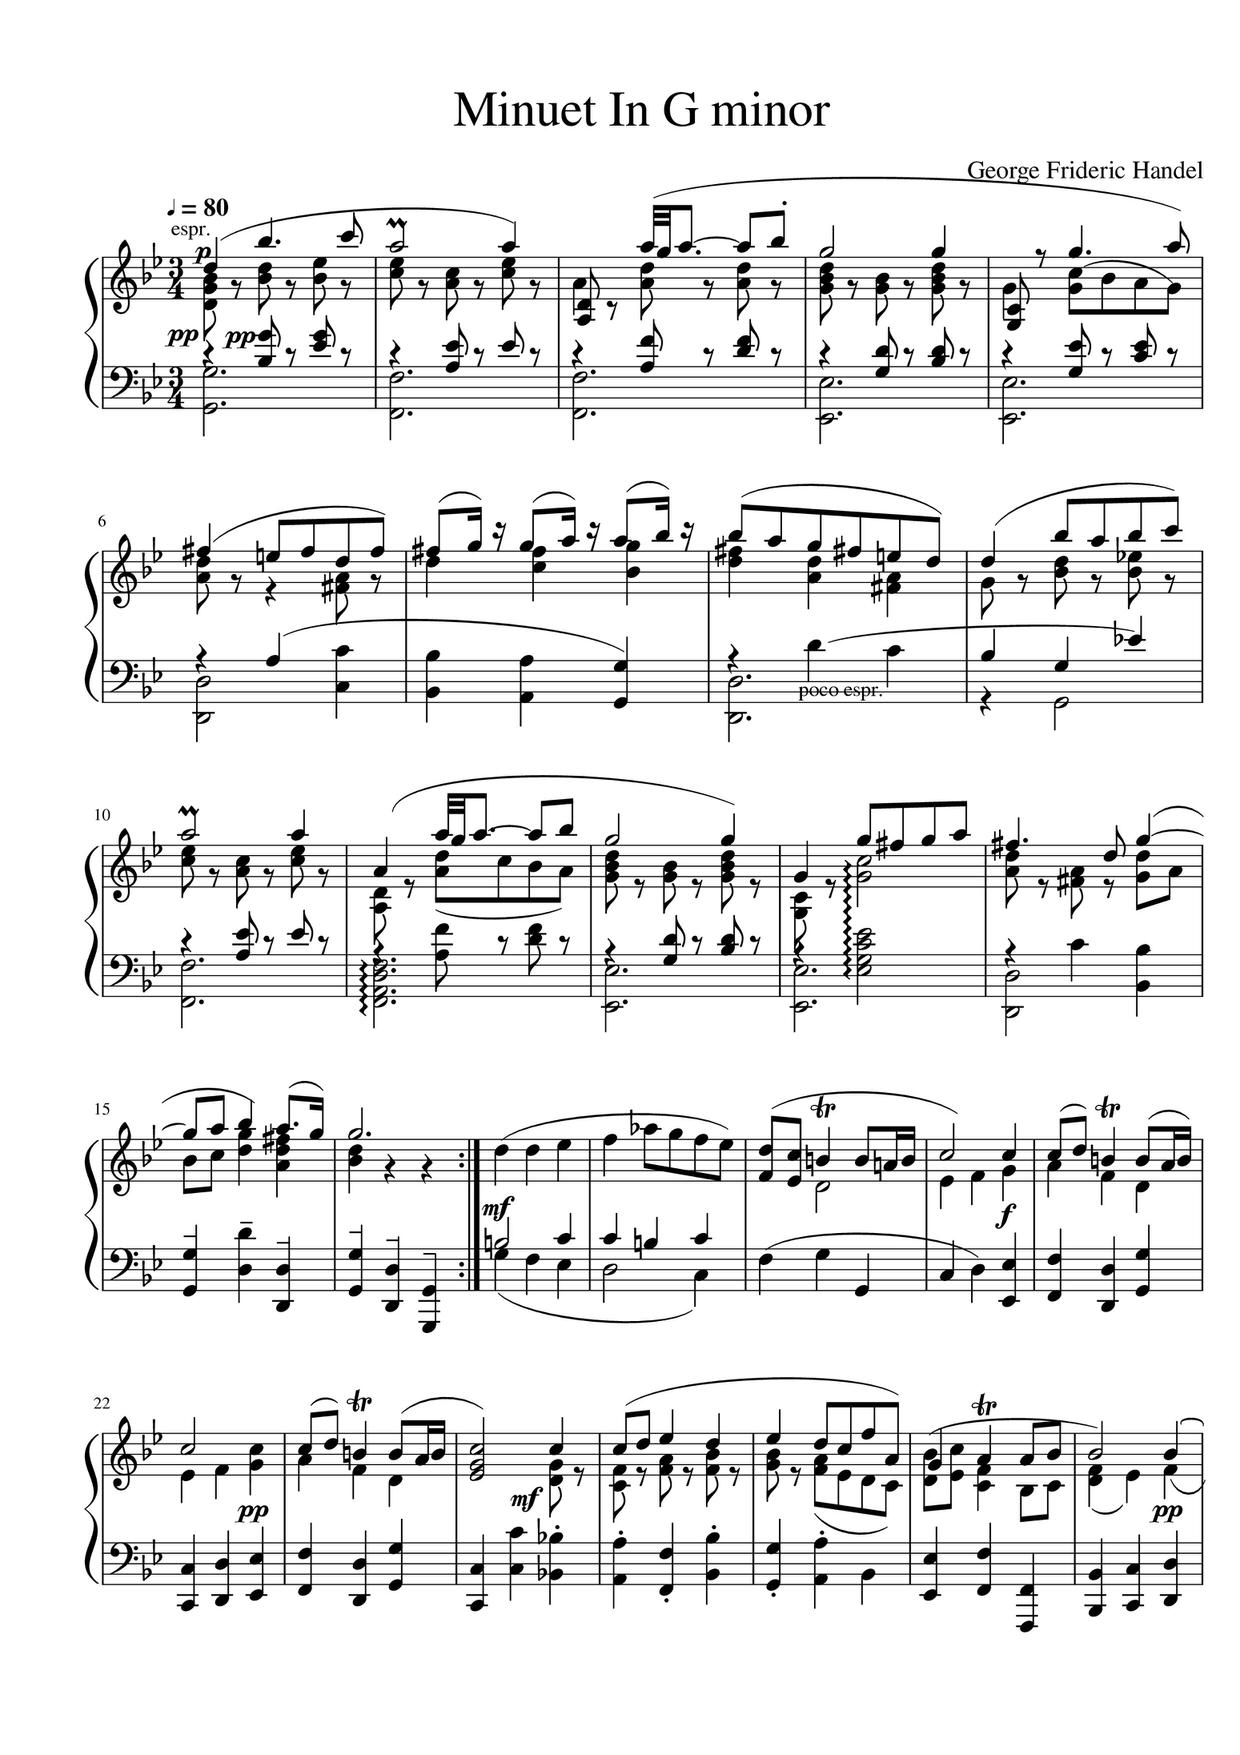 Minuet in G Minor Score